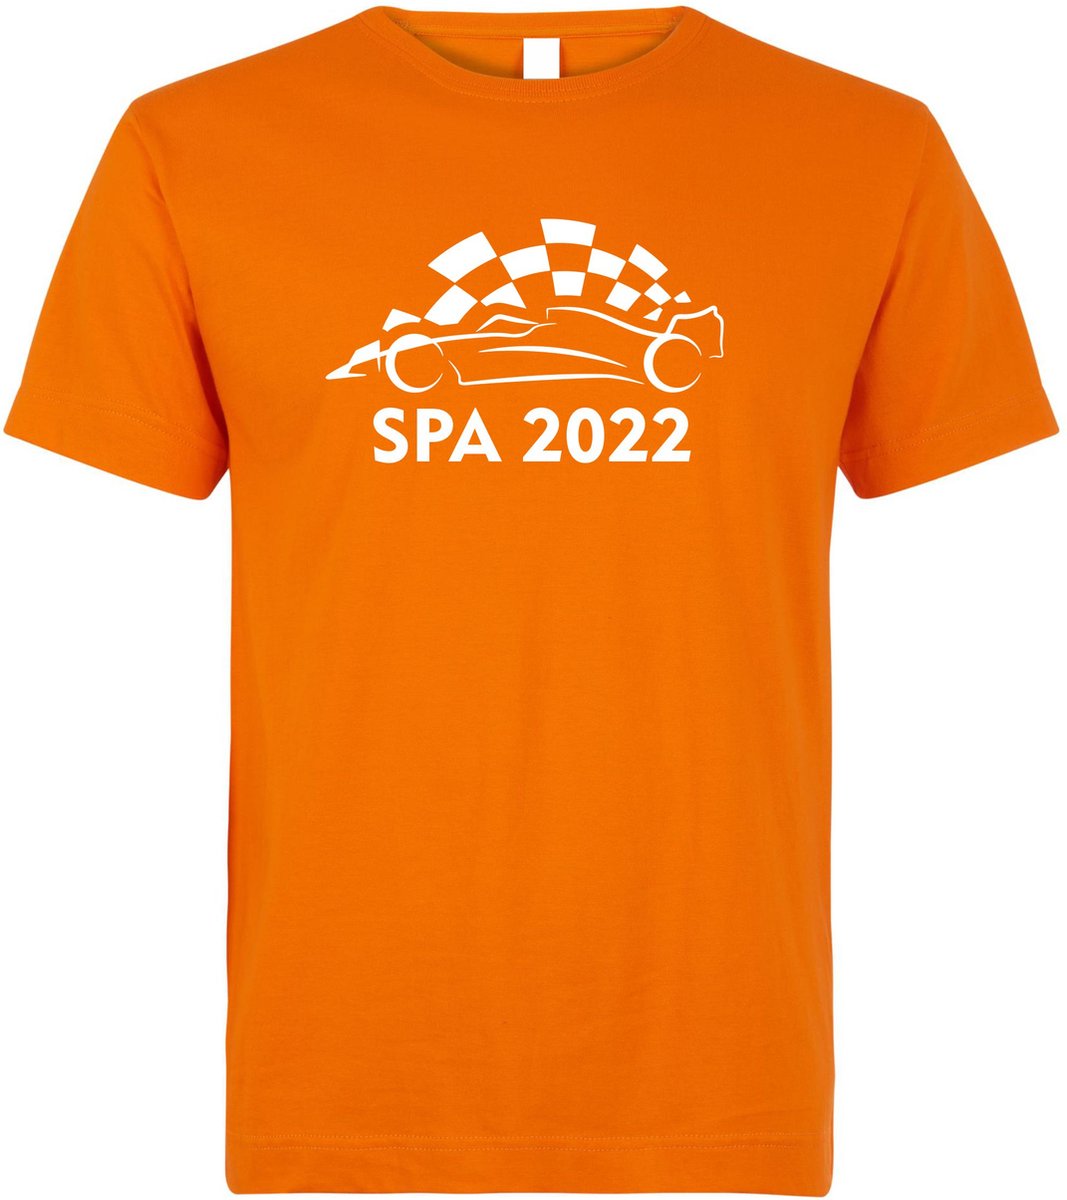 T-shirt Spa 2022 met raceauto | Max Verstappen / Red Bull Racing / Formule 1 fan | Grand Prix Circuit Spa-Francorchamps | kleding shirt | Oranje | maat XS